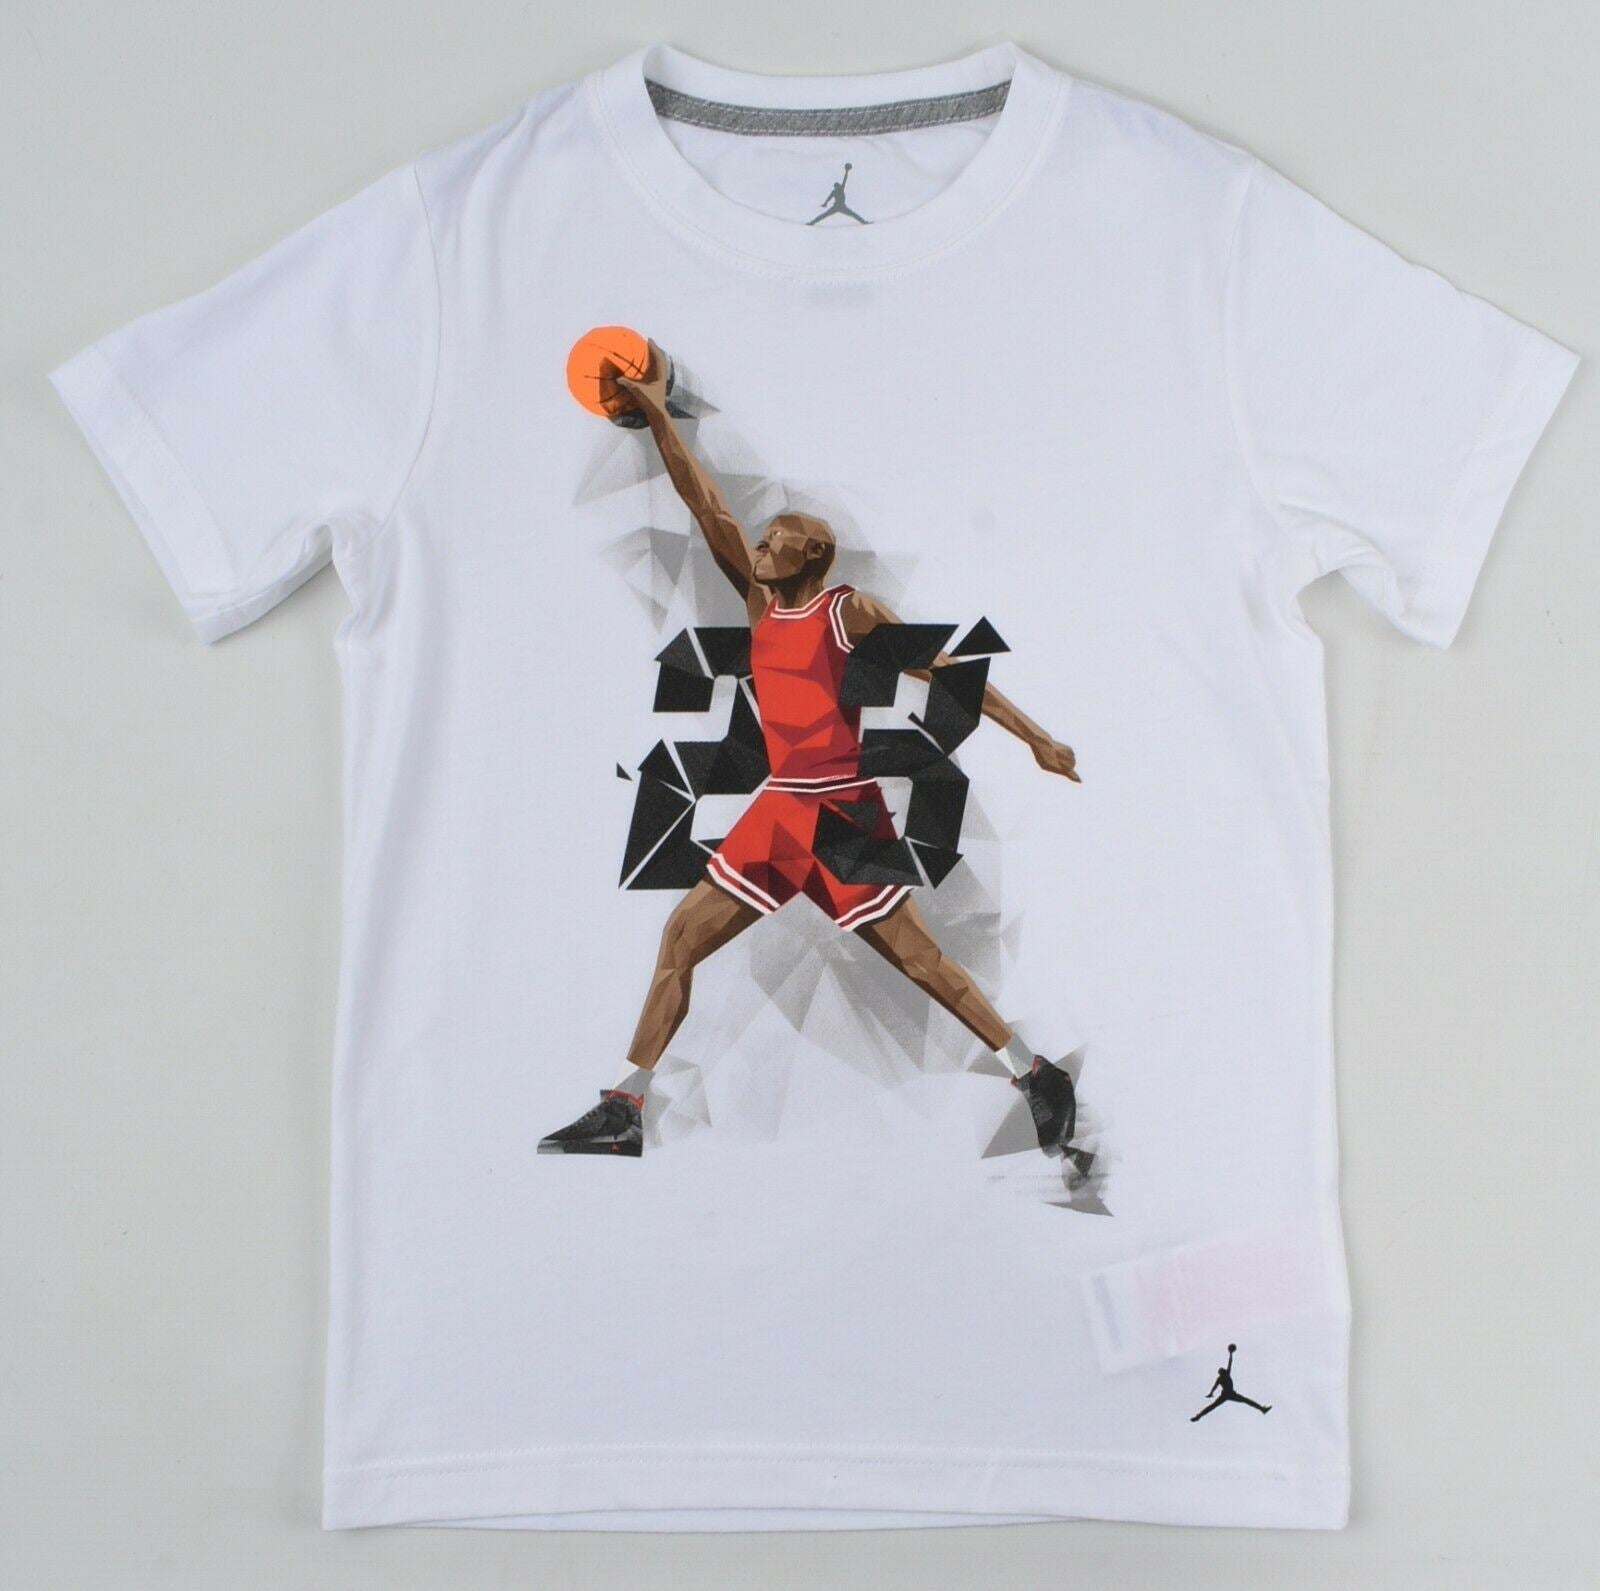 NIKE AIR JORDAN Boys' Jordan Graphic Print T-shirt, White, 10 y /11 y /12 years